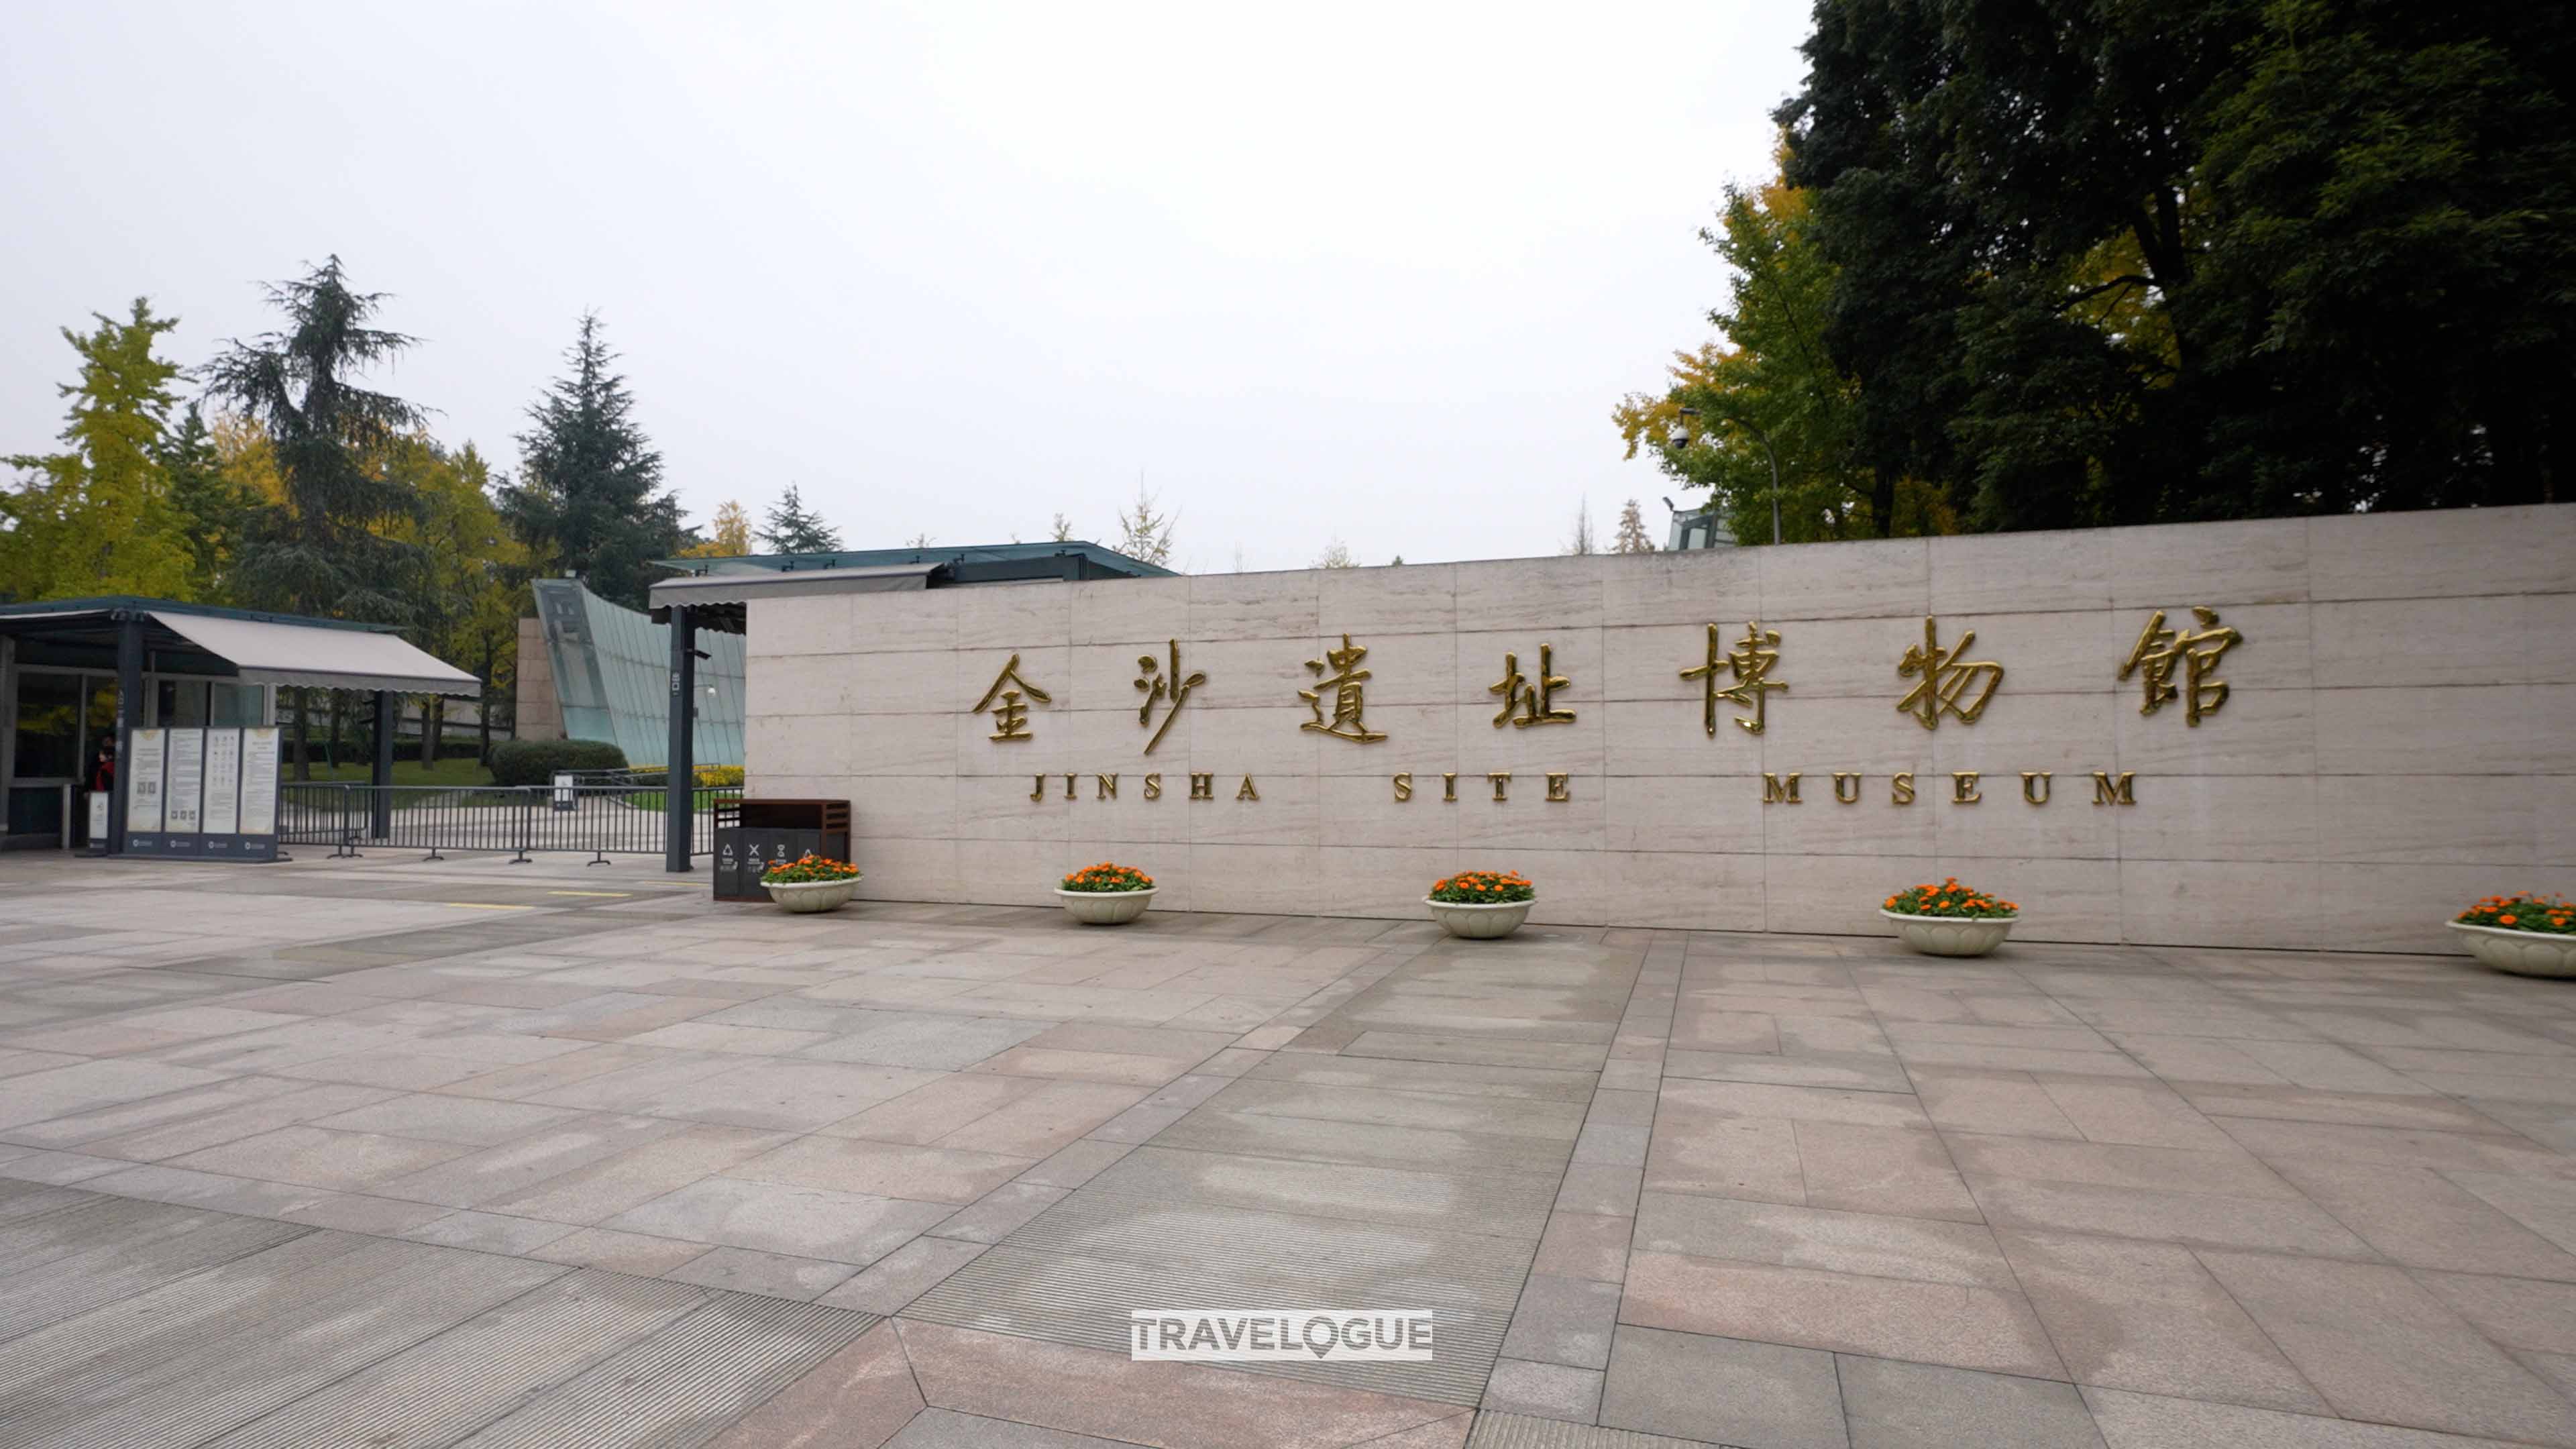 A view of the Jinsha Site Museum in Chengdu, Sichuan Province. /CGTN